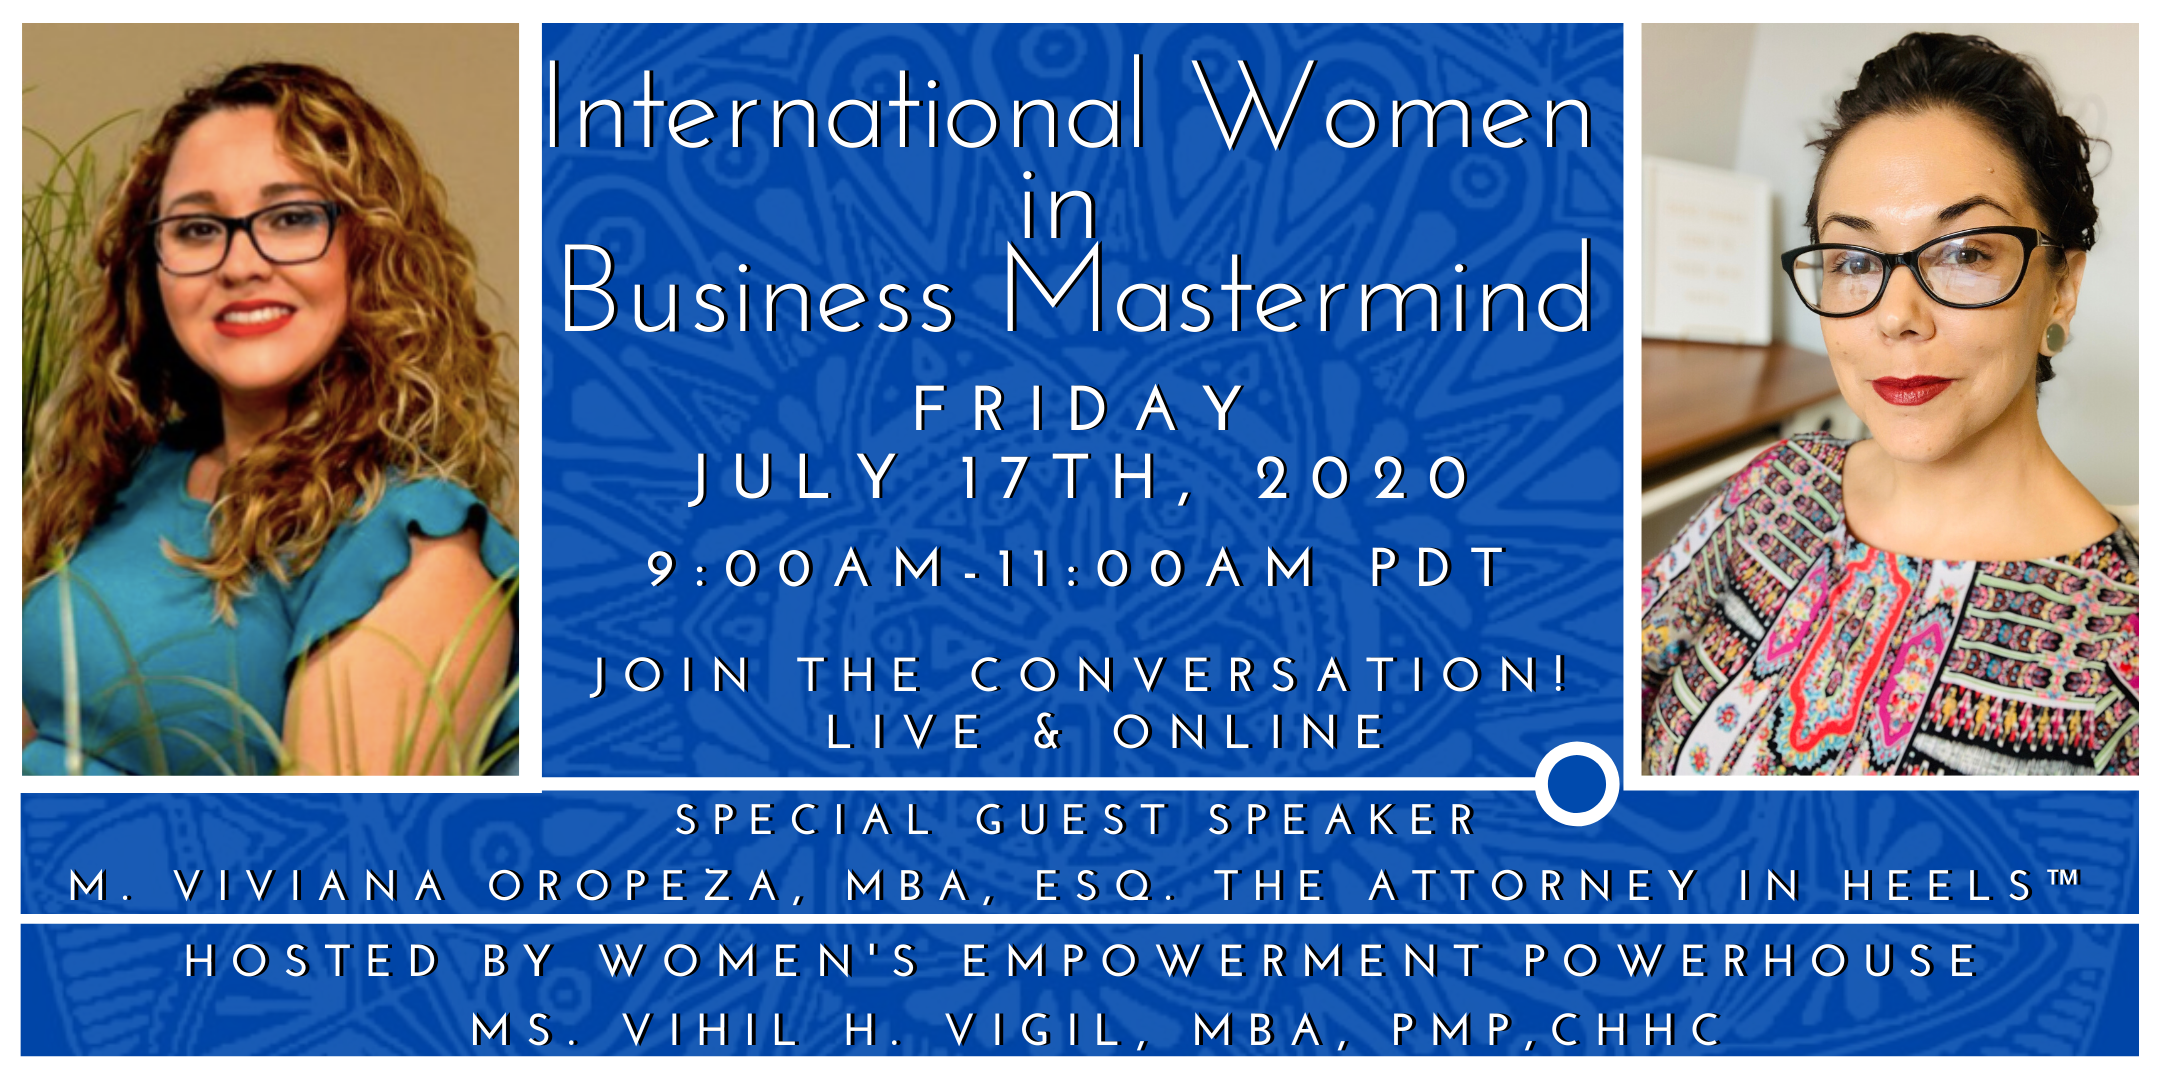 International Women in Business Mastermind Featuring The Attorney in Heels!